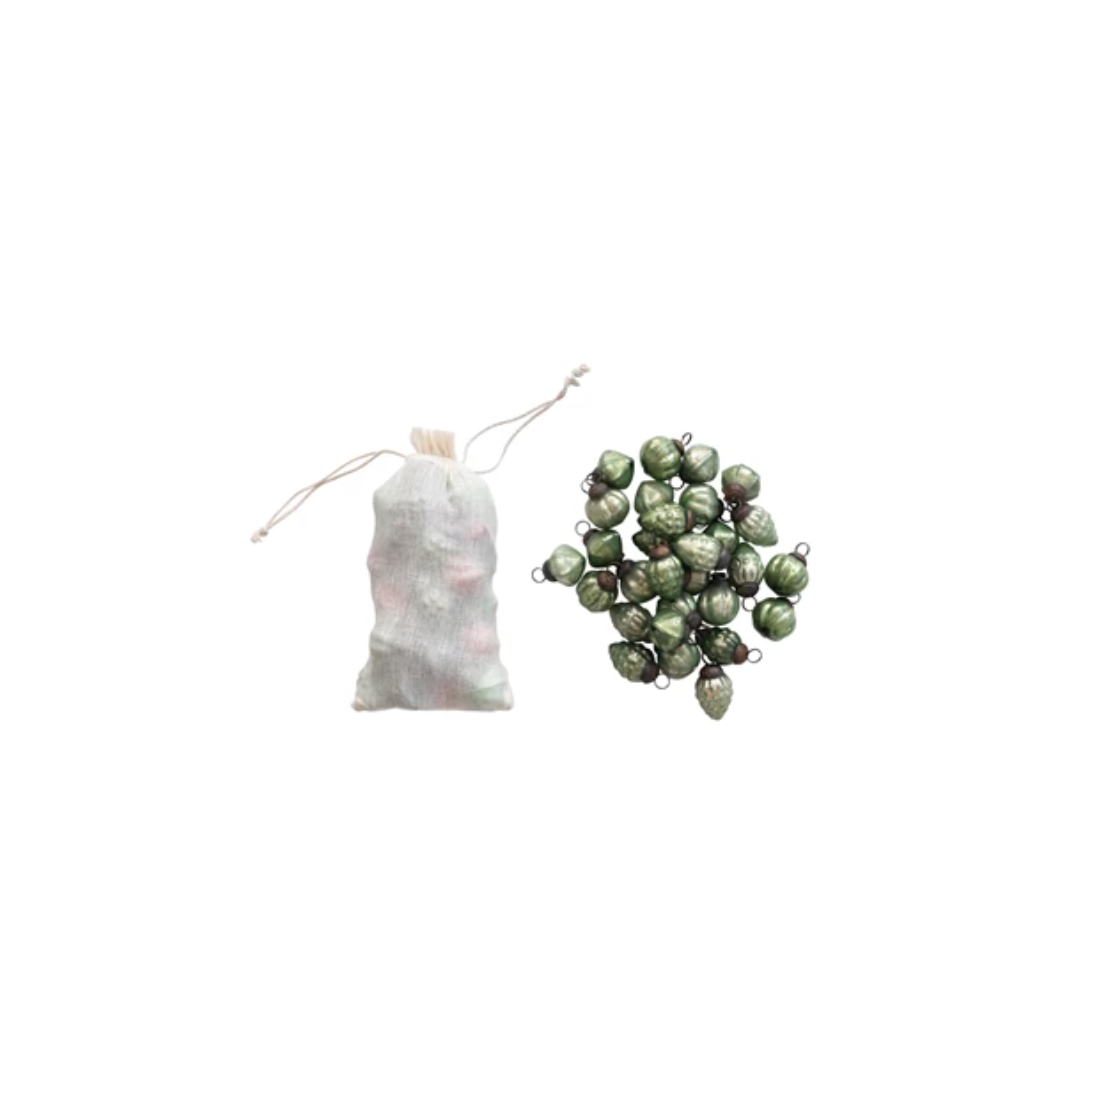 Mini Mercury Glass Ornaments in Muslin Bag